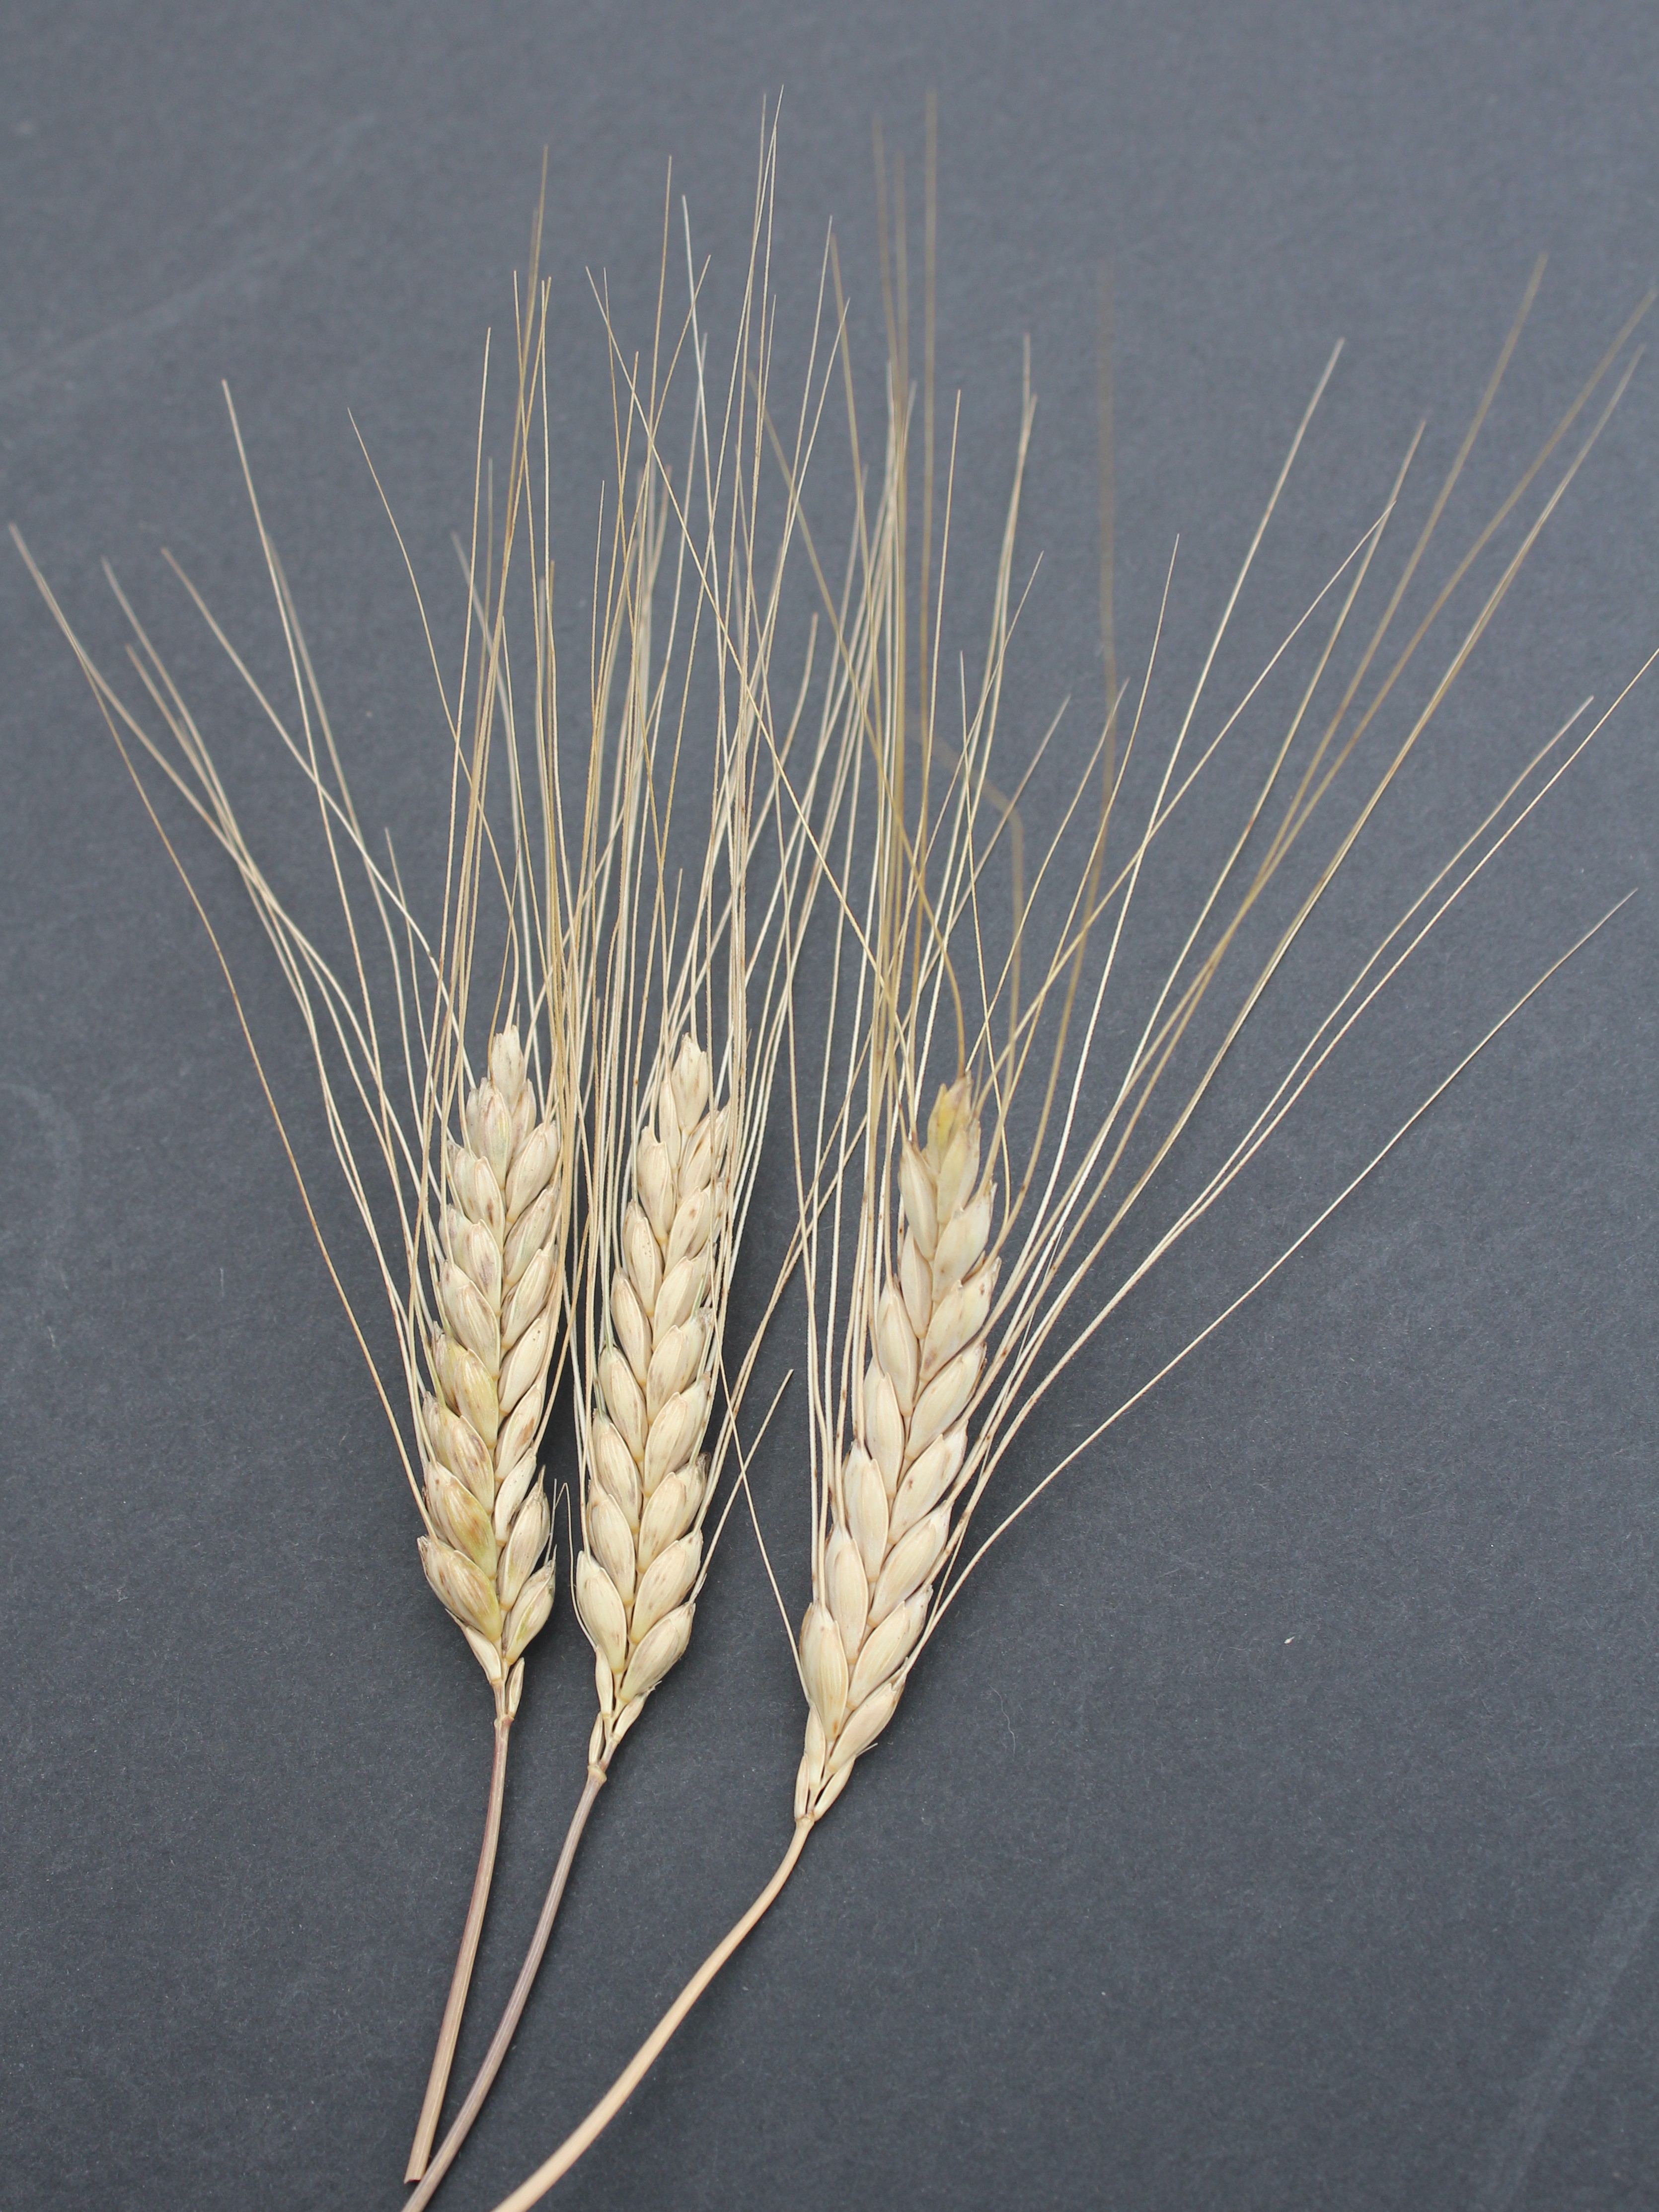 Arashigaoka geweer Messing Ancient Grains: Emmer — Department of Plant Science